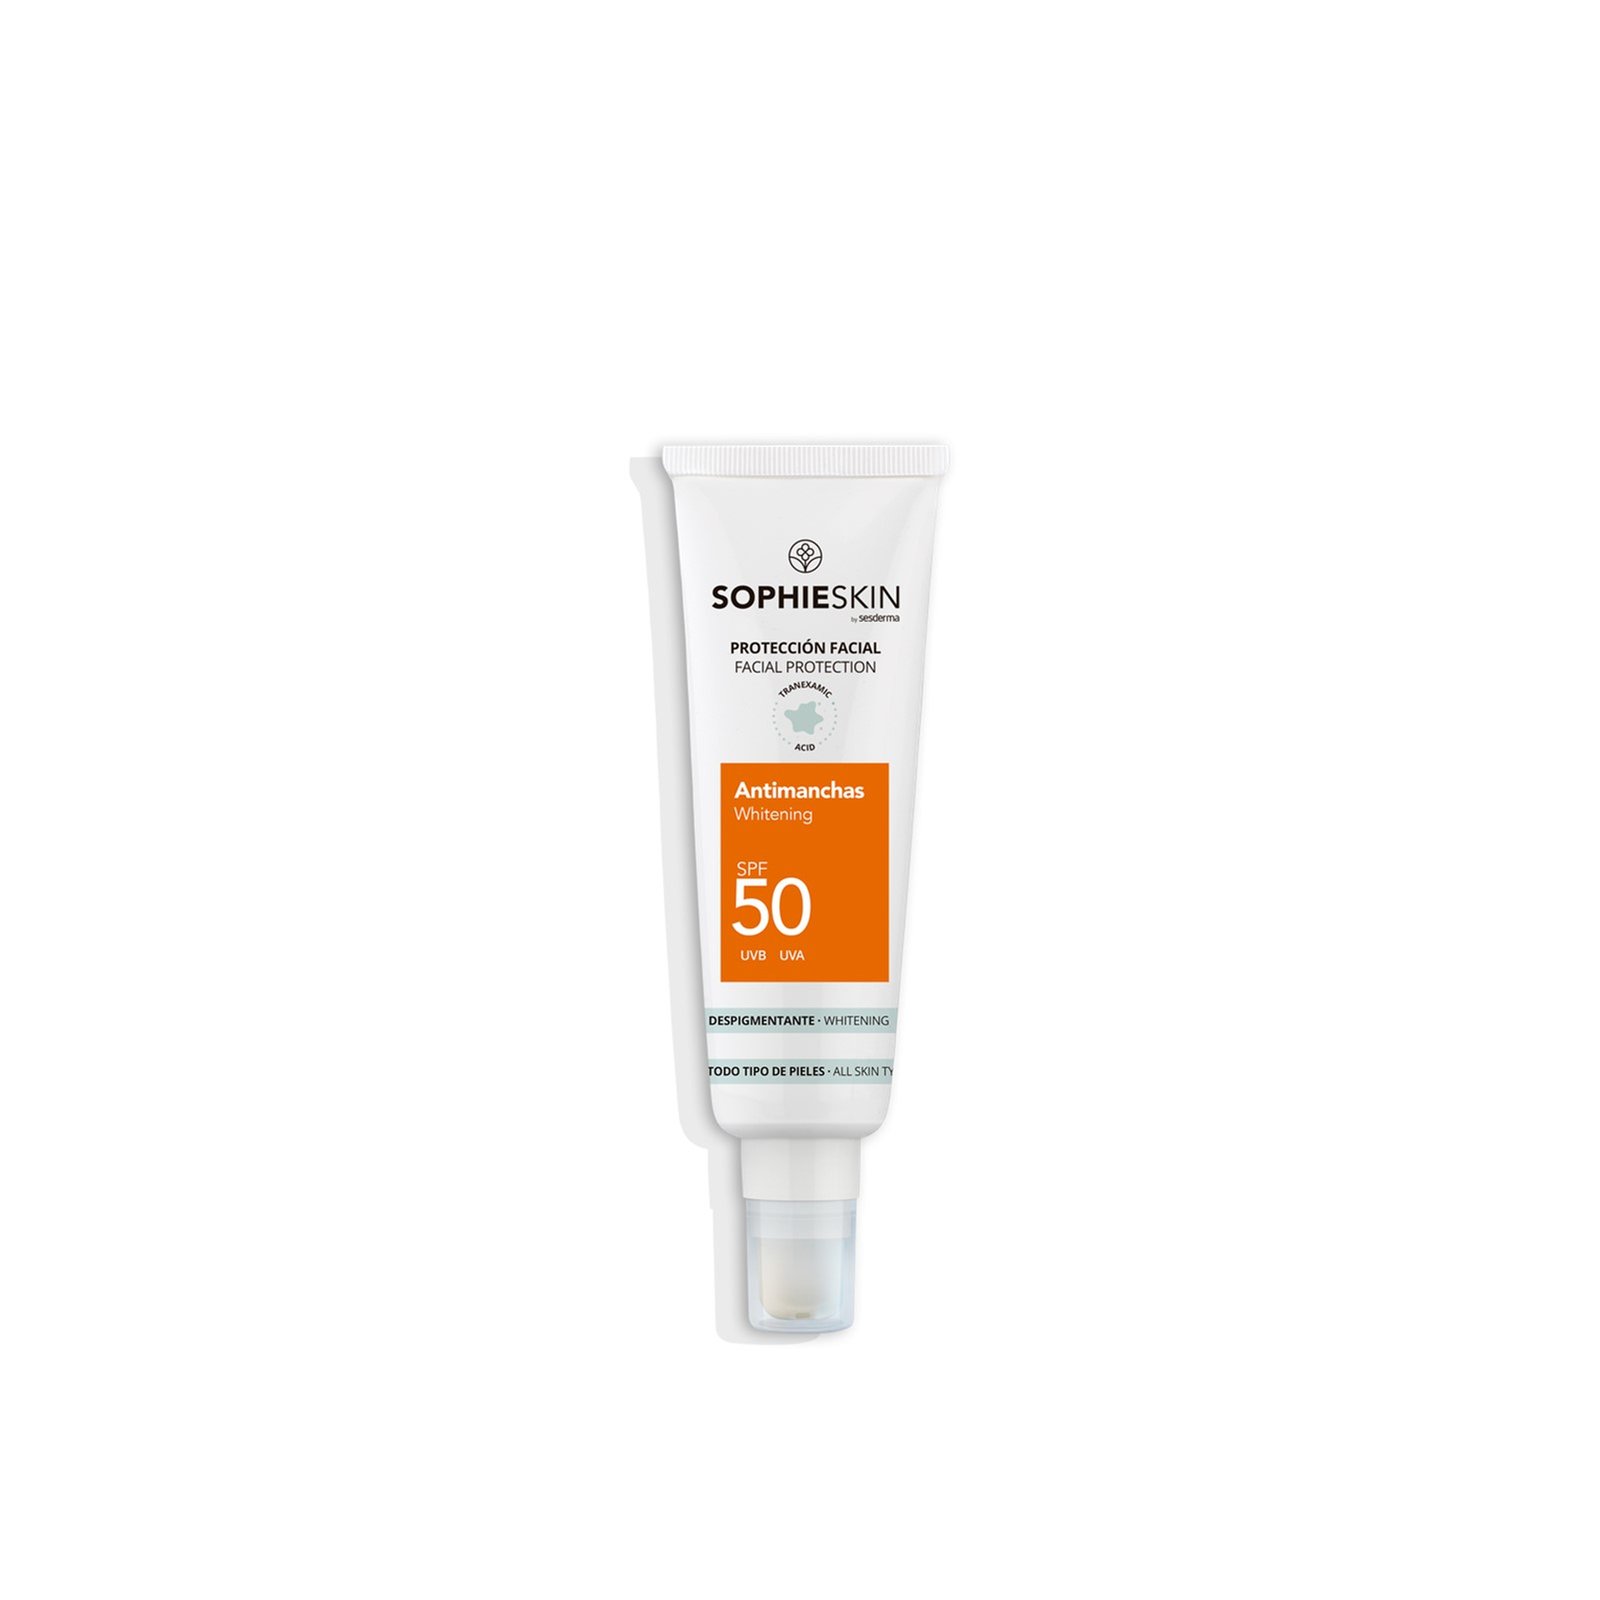 Sophieskin Whitening Facial Protection Sunscreen SPF50 50ml (1.7 fl oz)